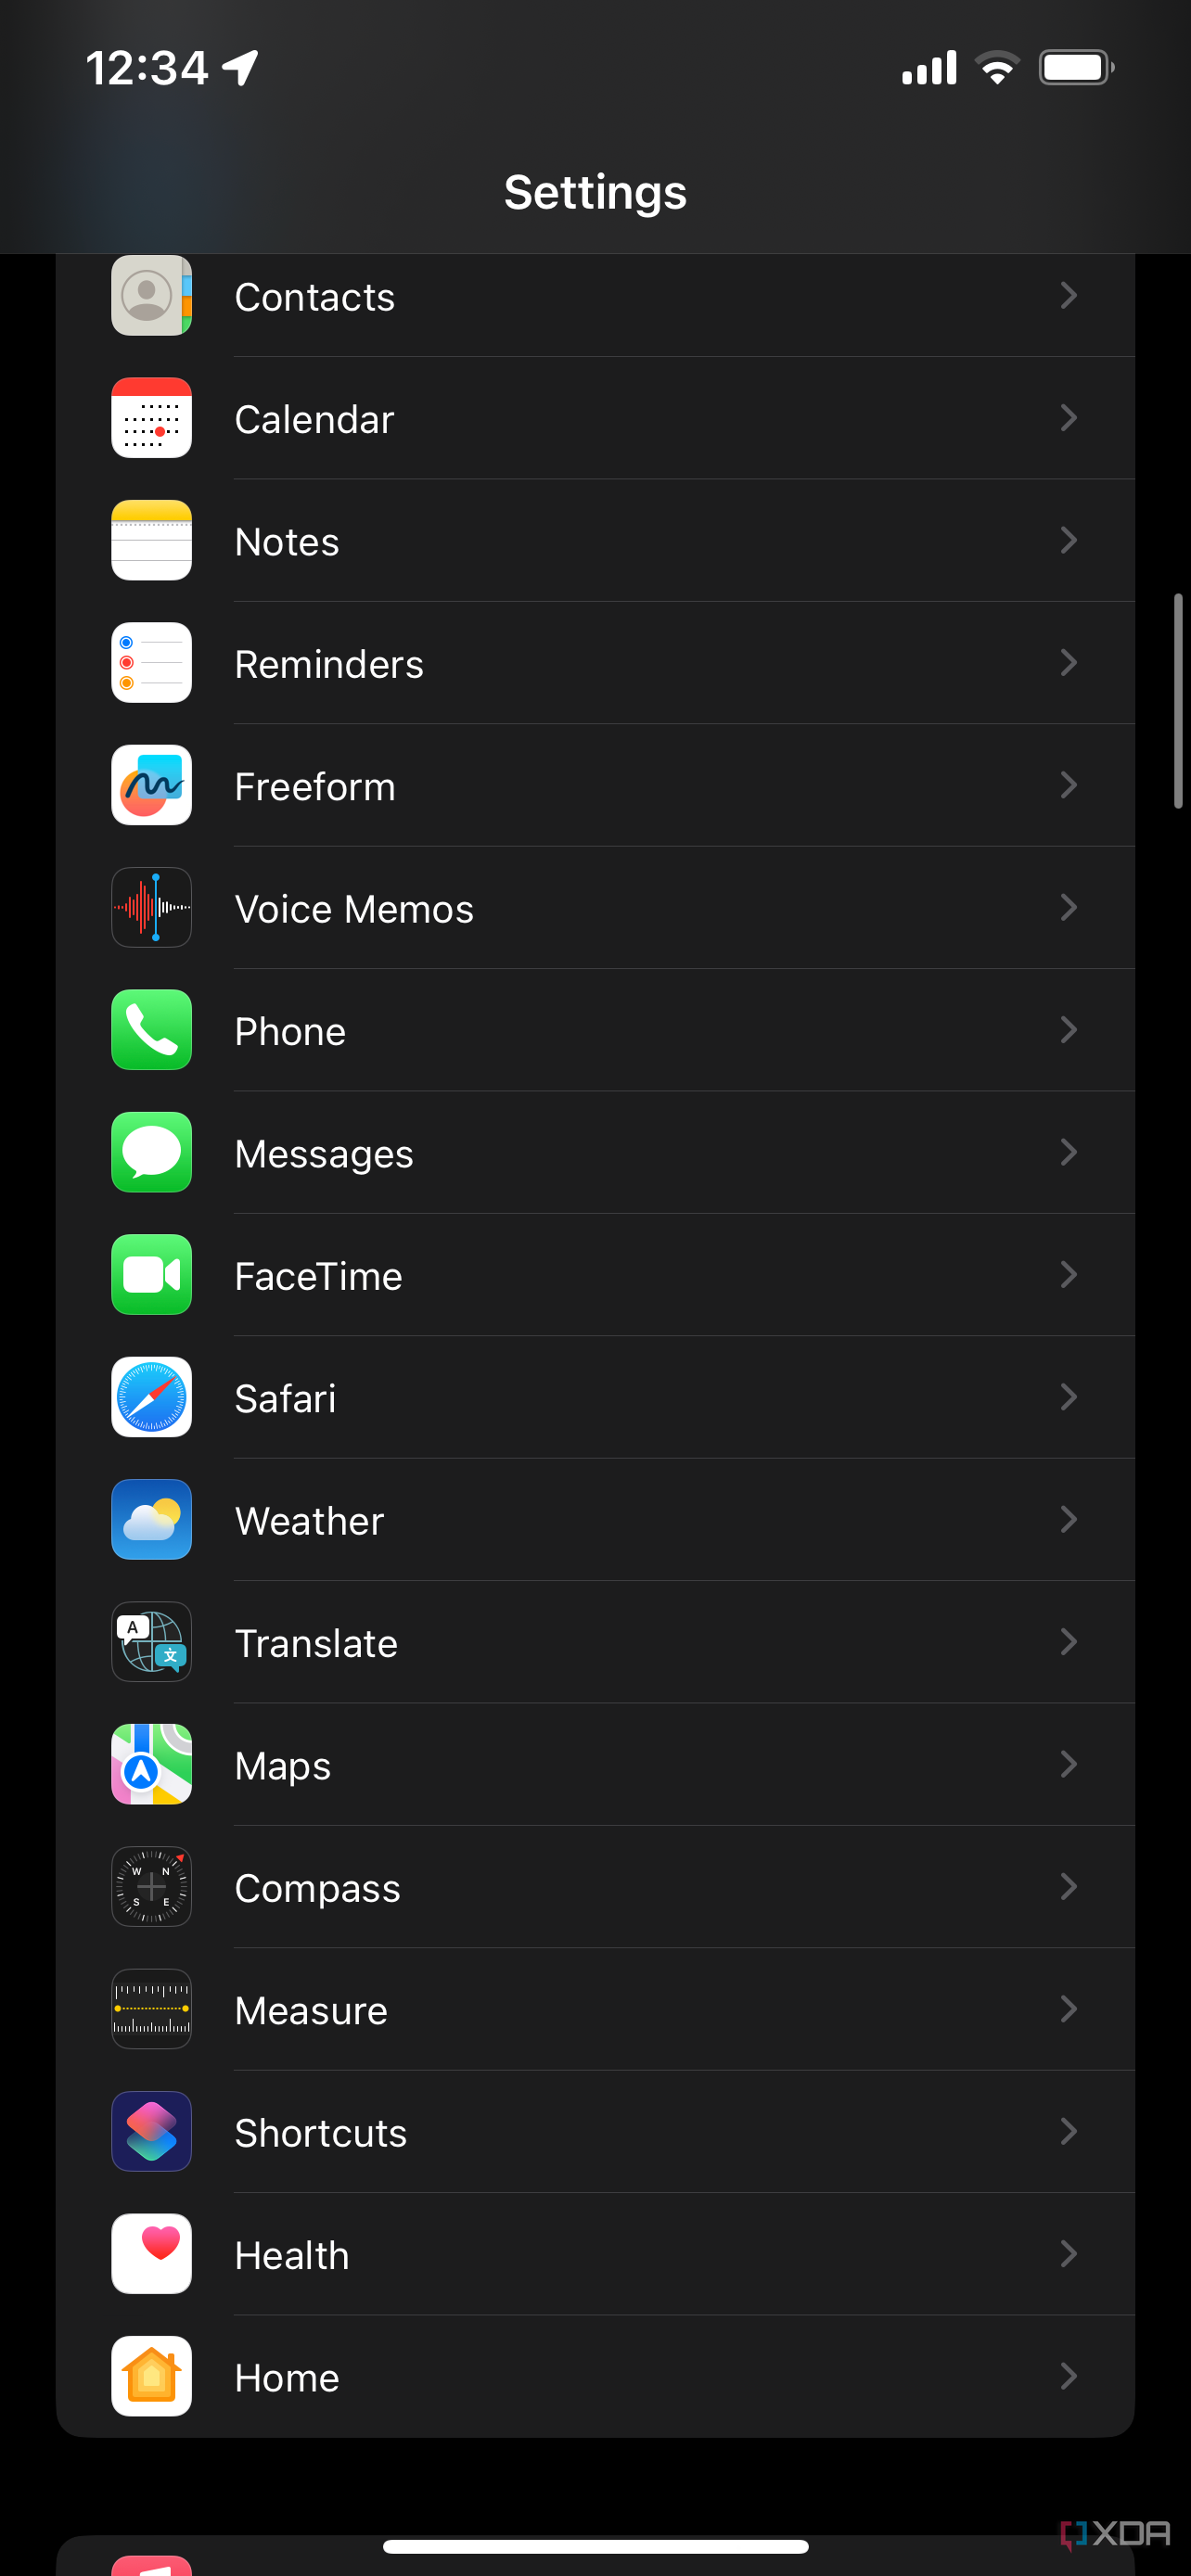 Safari in the list of iOS Settings